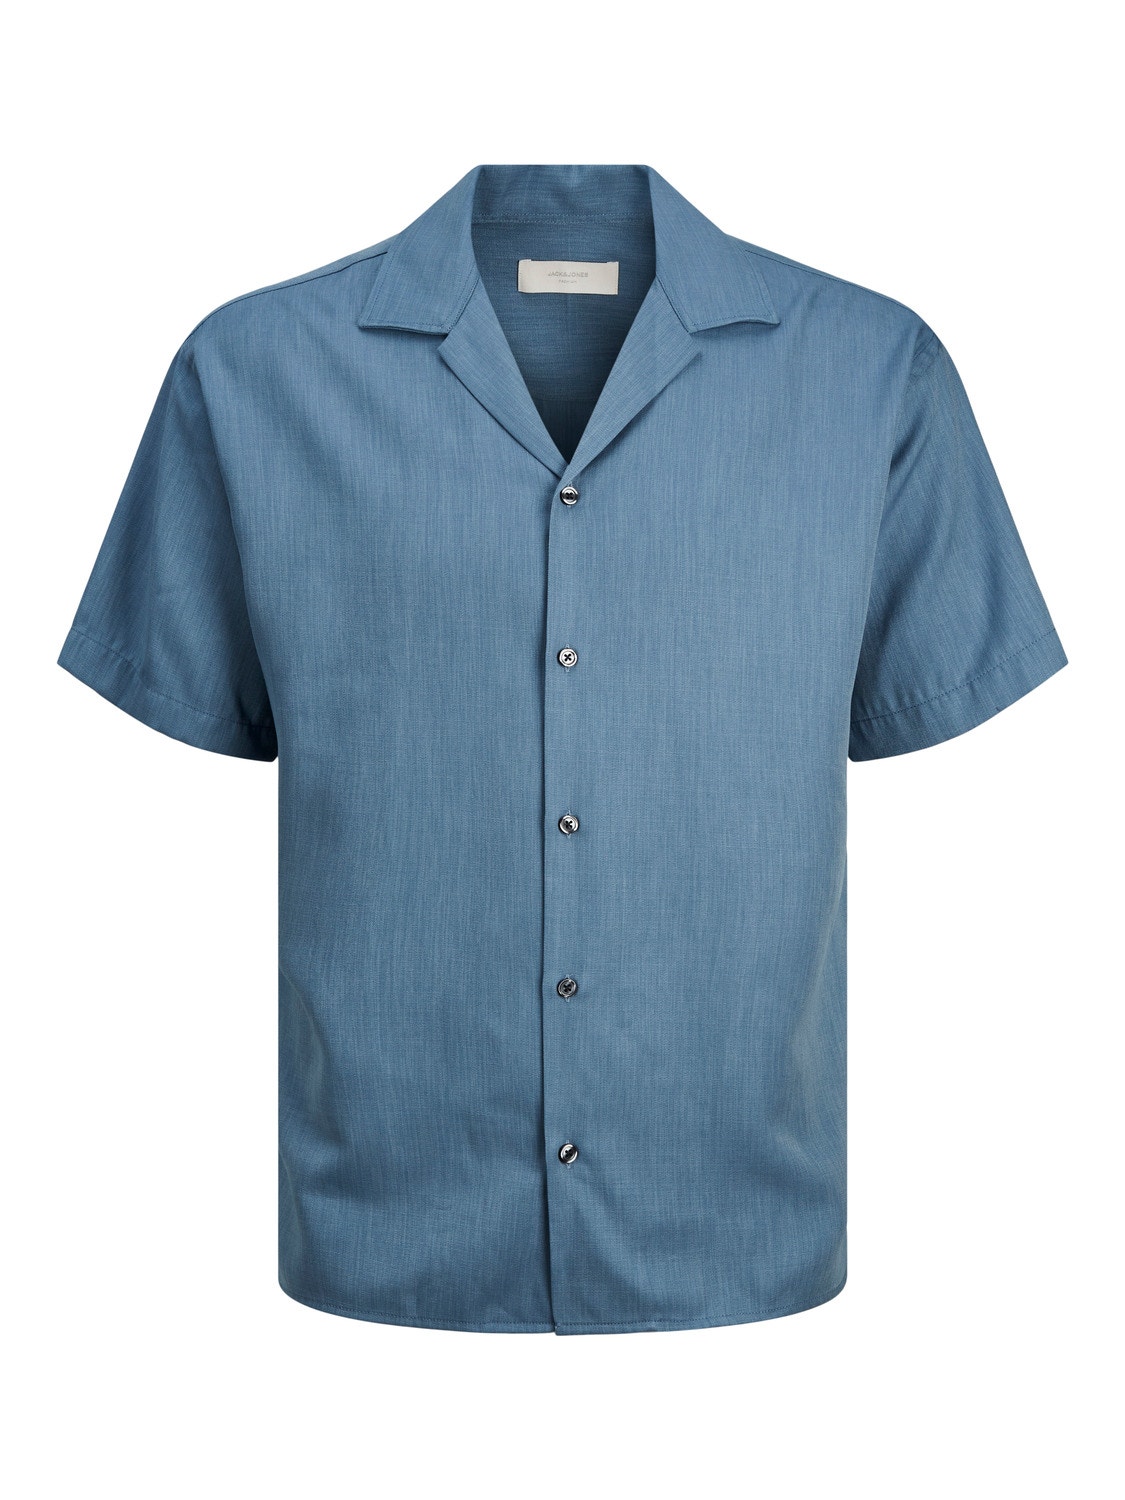 Jack & Jones Relaxed Fit Shirt -Captains Blue - 12251027